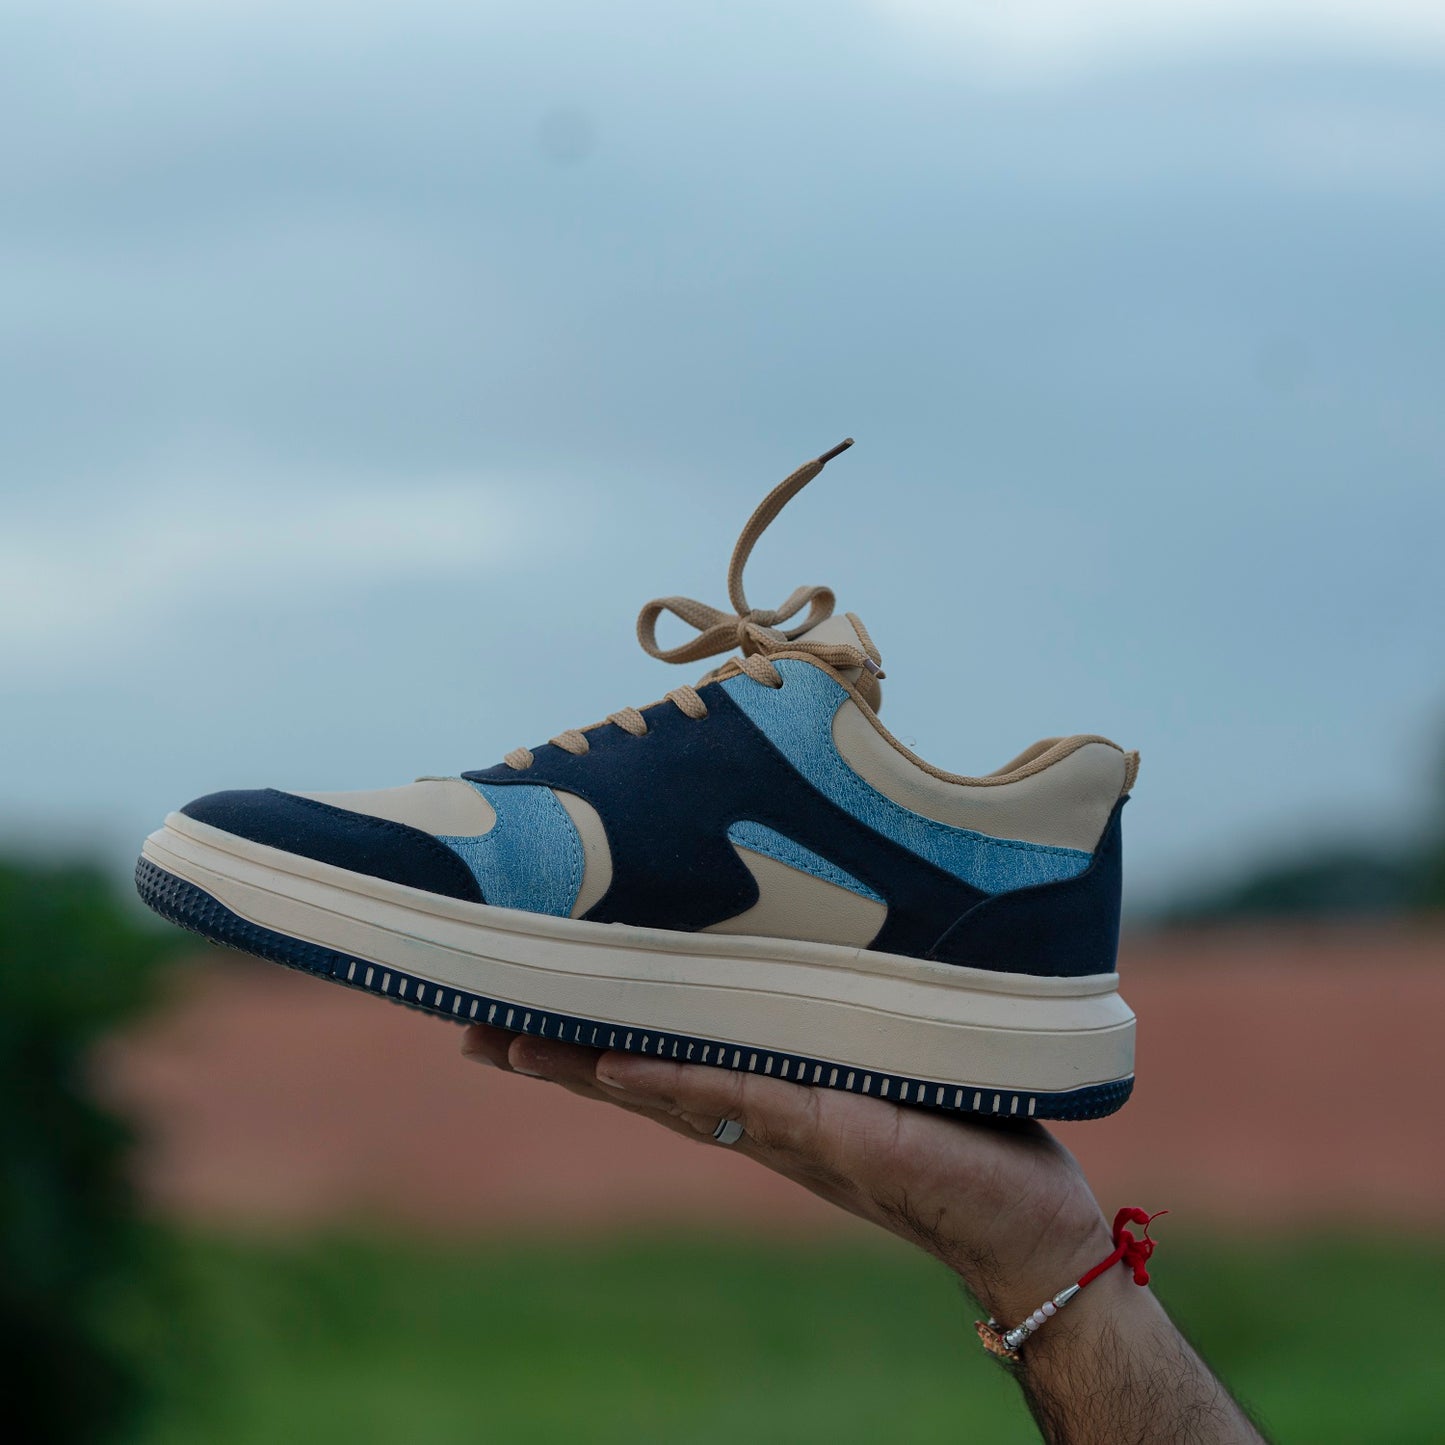 The Aurous Falcon Blue Sneakers